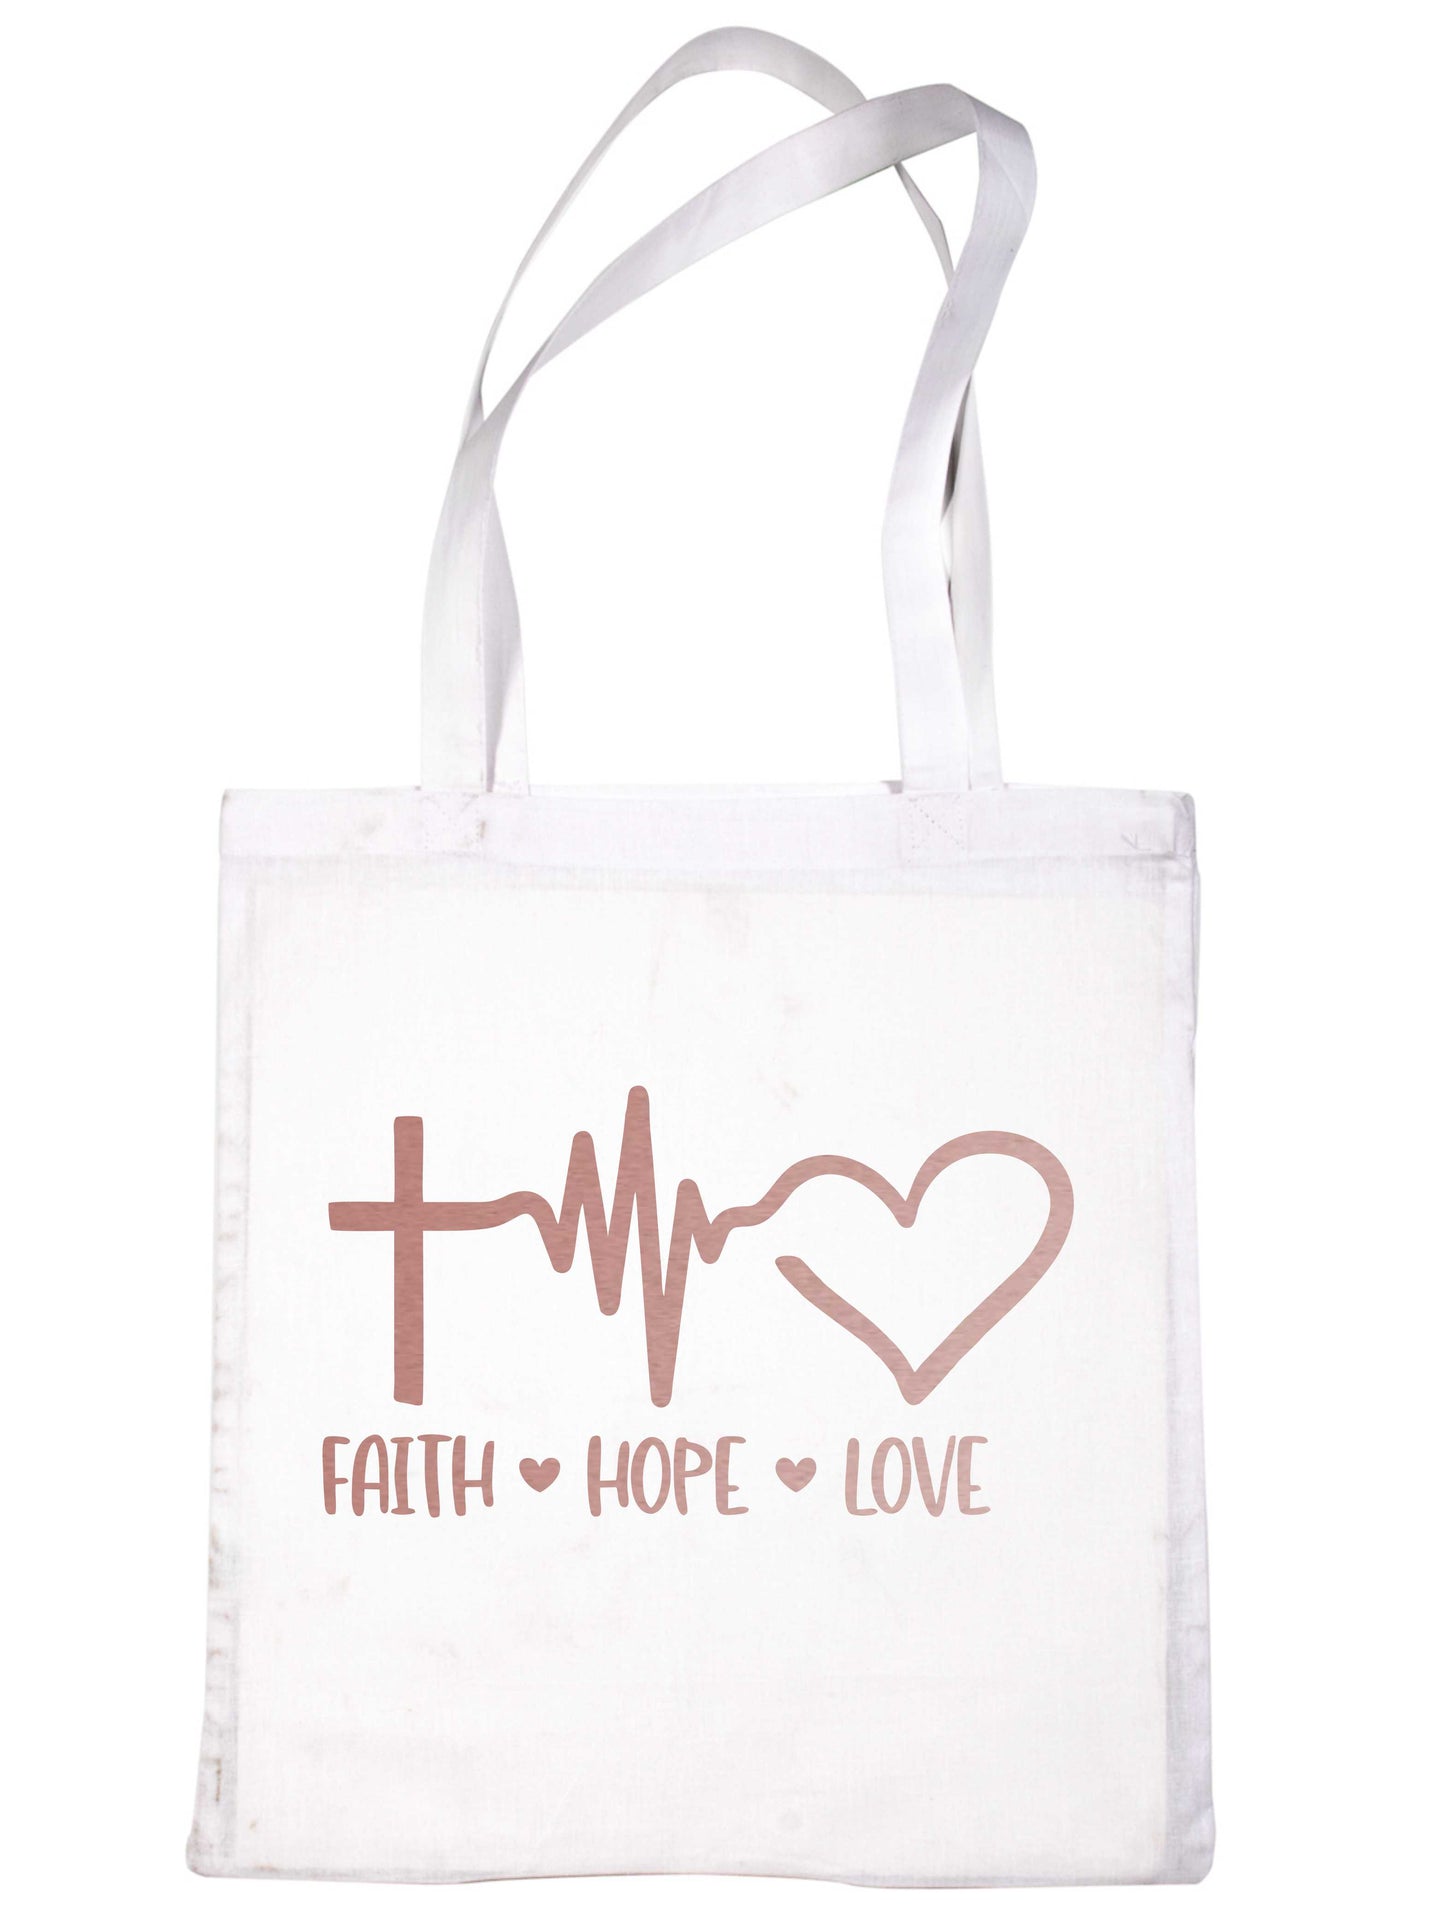 Faith Hope Love In Rose Gold Print Christian Church Gift Resuable Shopping Bag